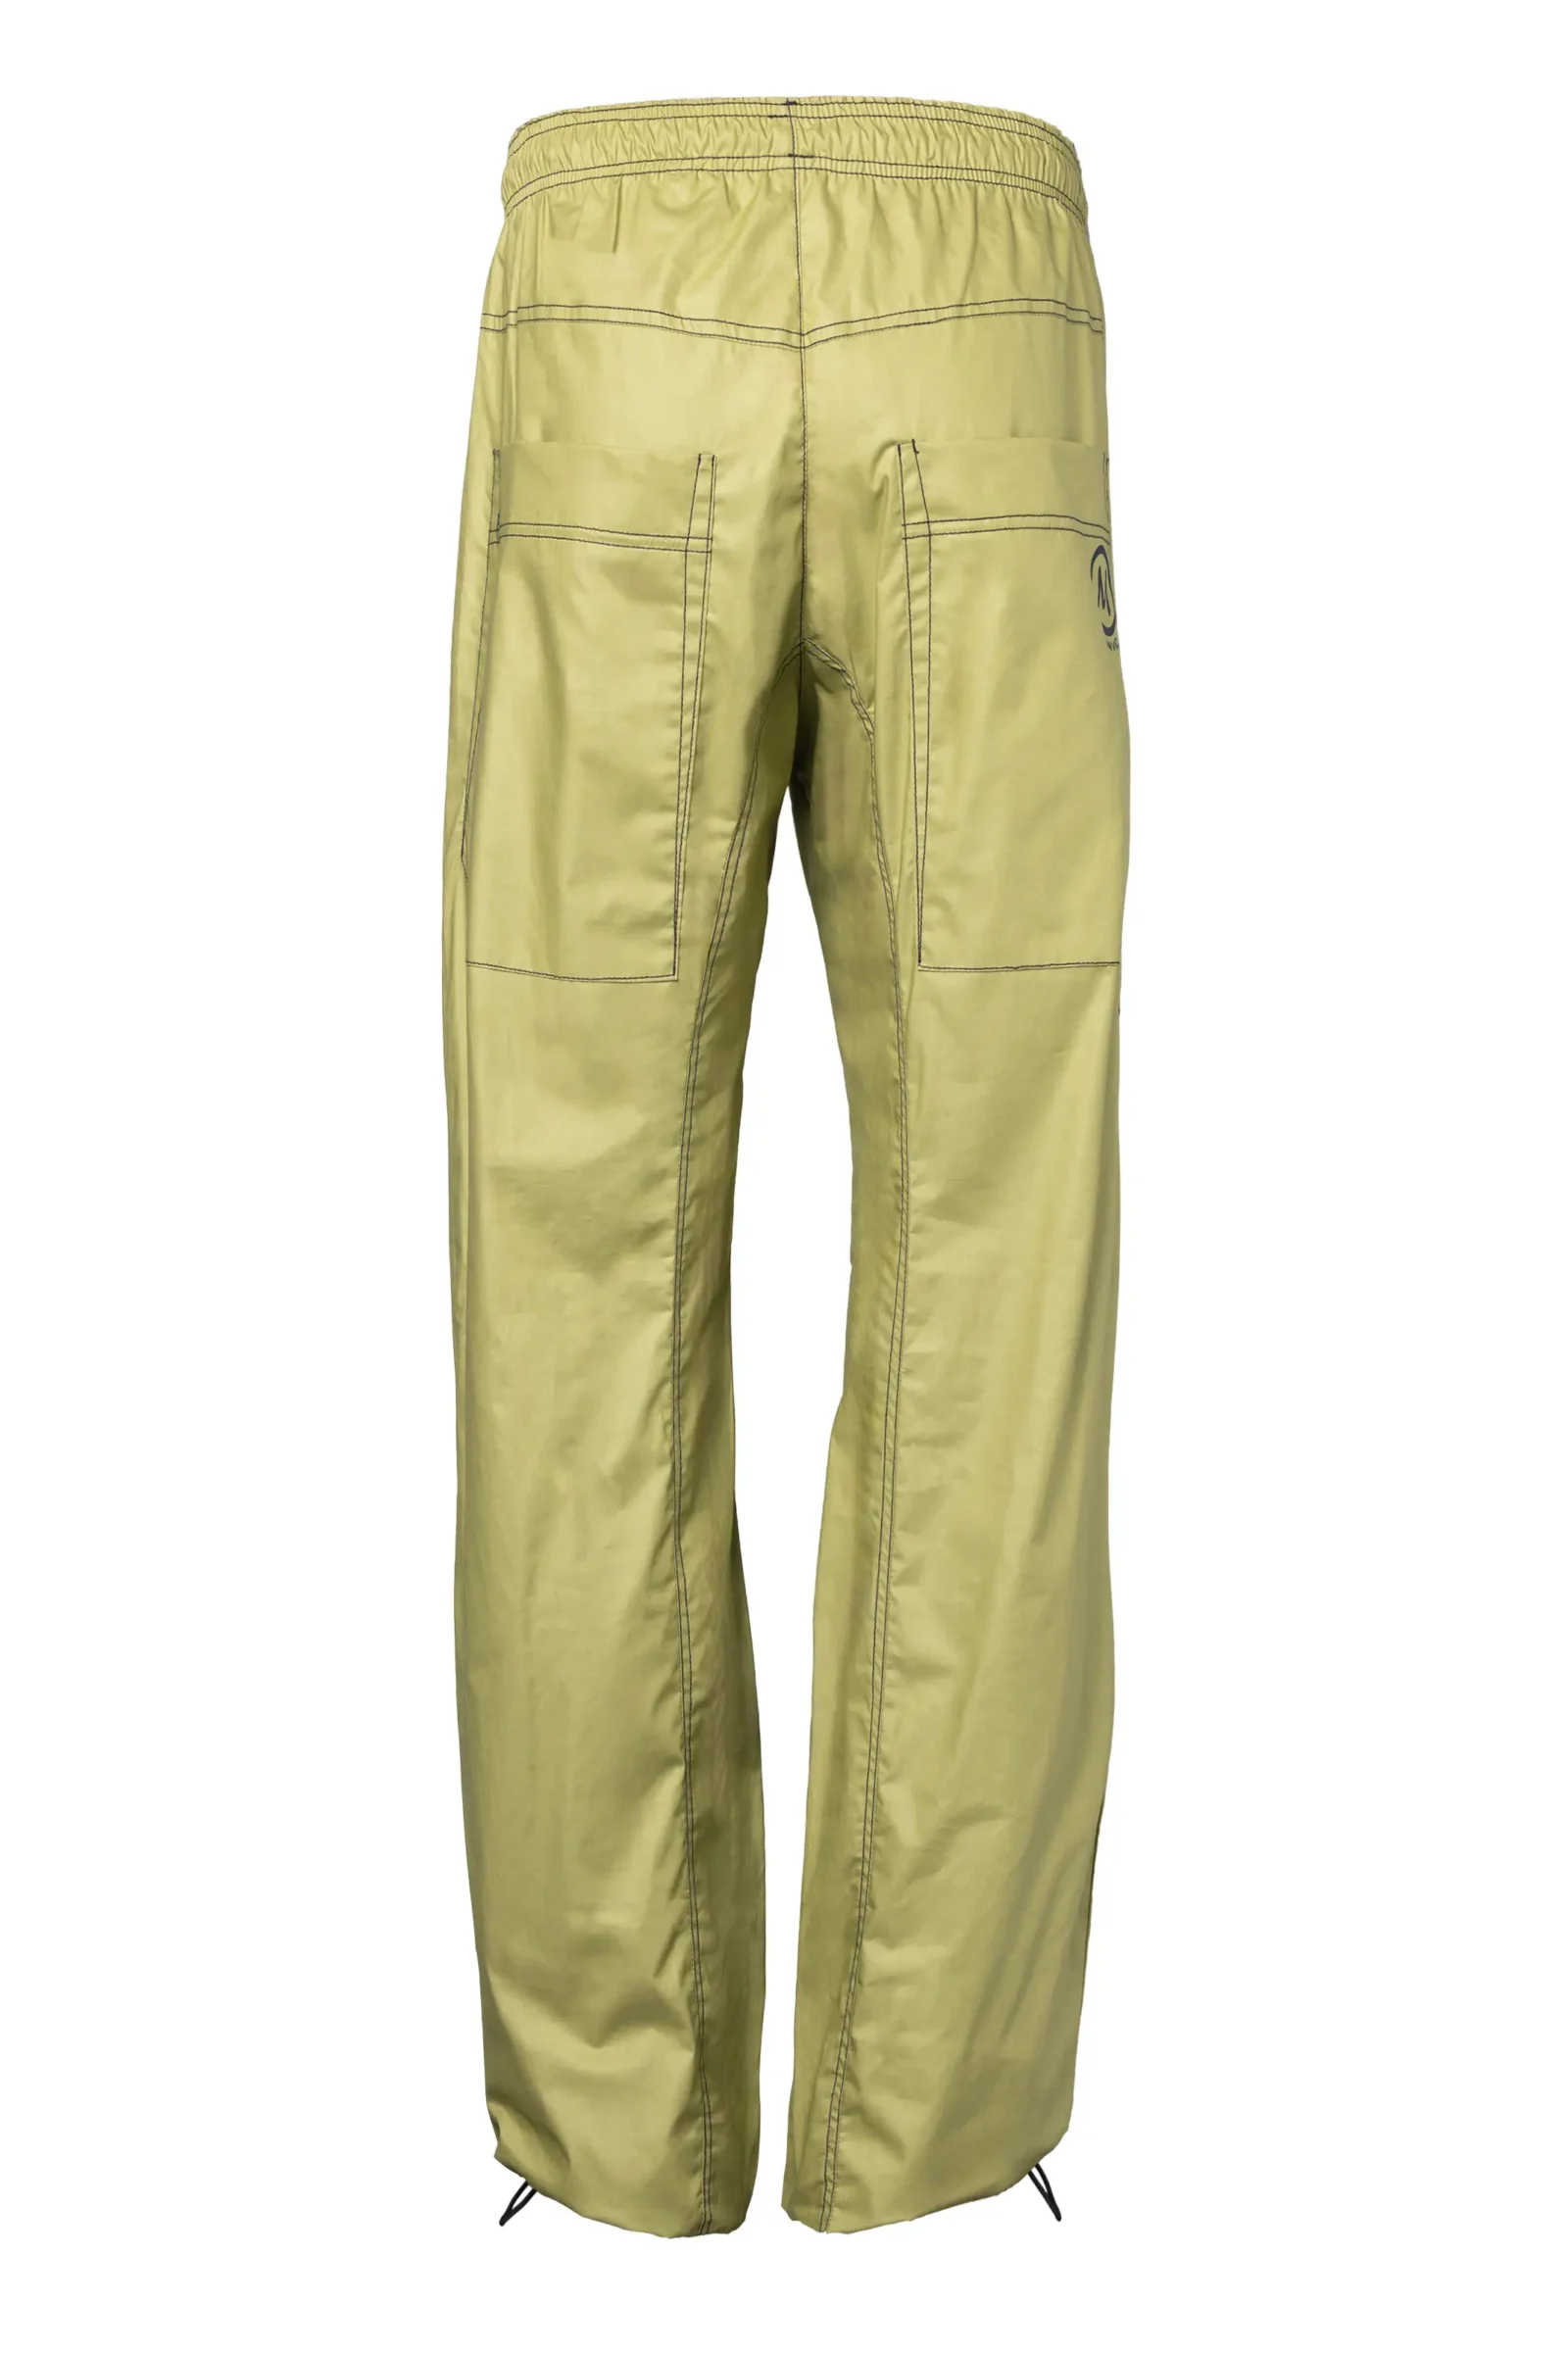 Pantalon homme imperméable - vert sauge - JIMMY MONVIC